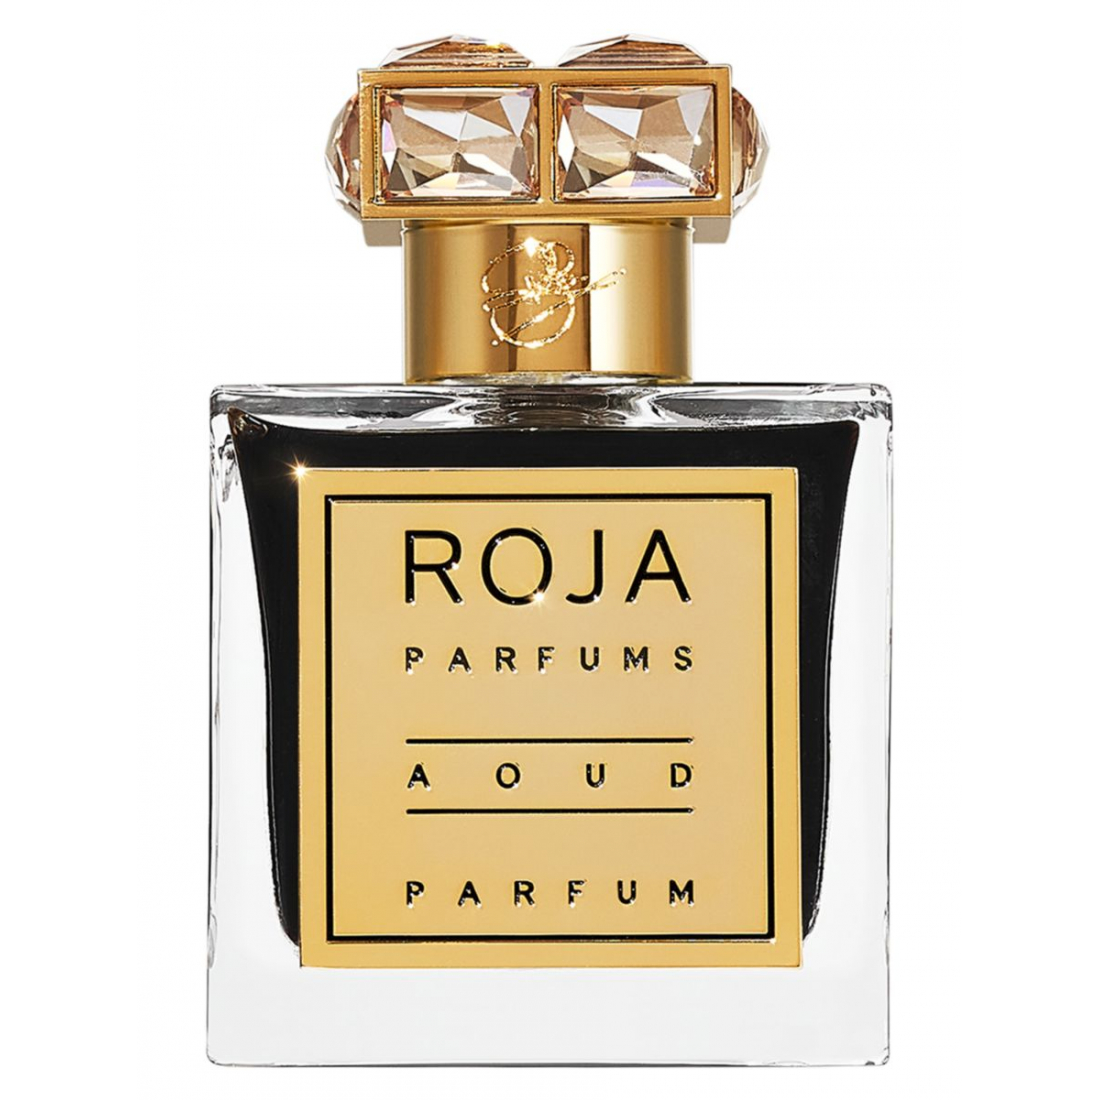 'Aoud' Perfume - 100 ml